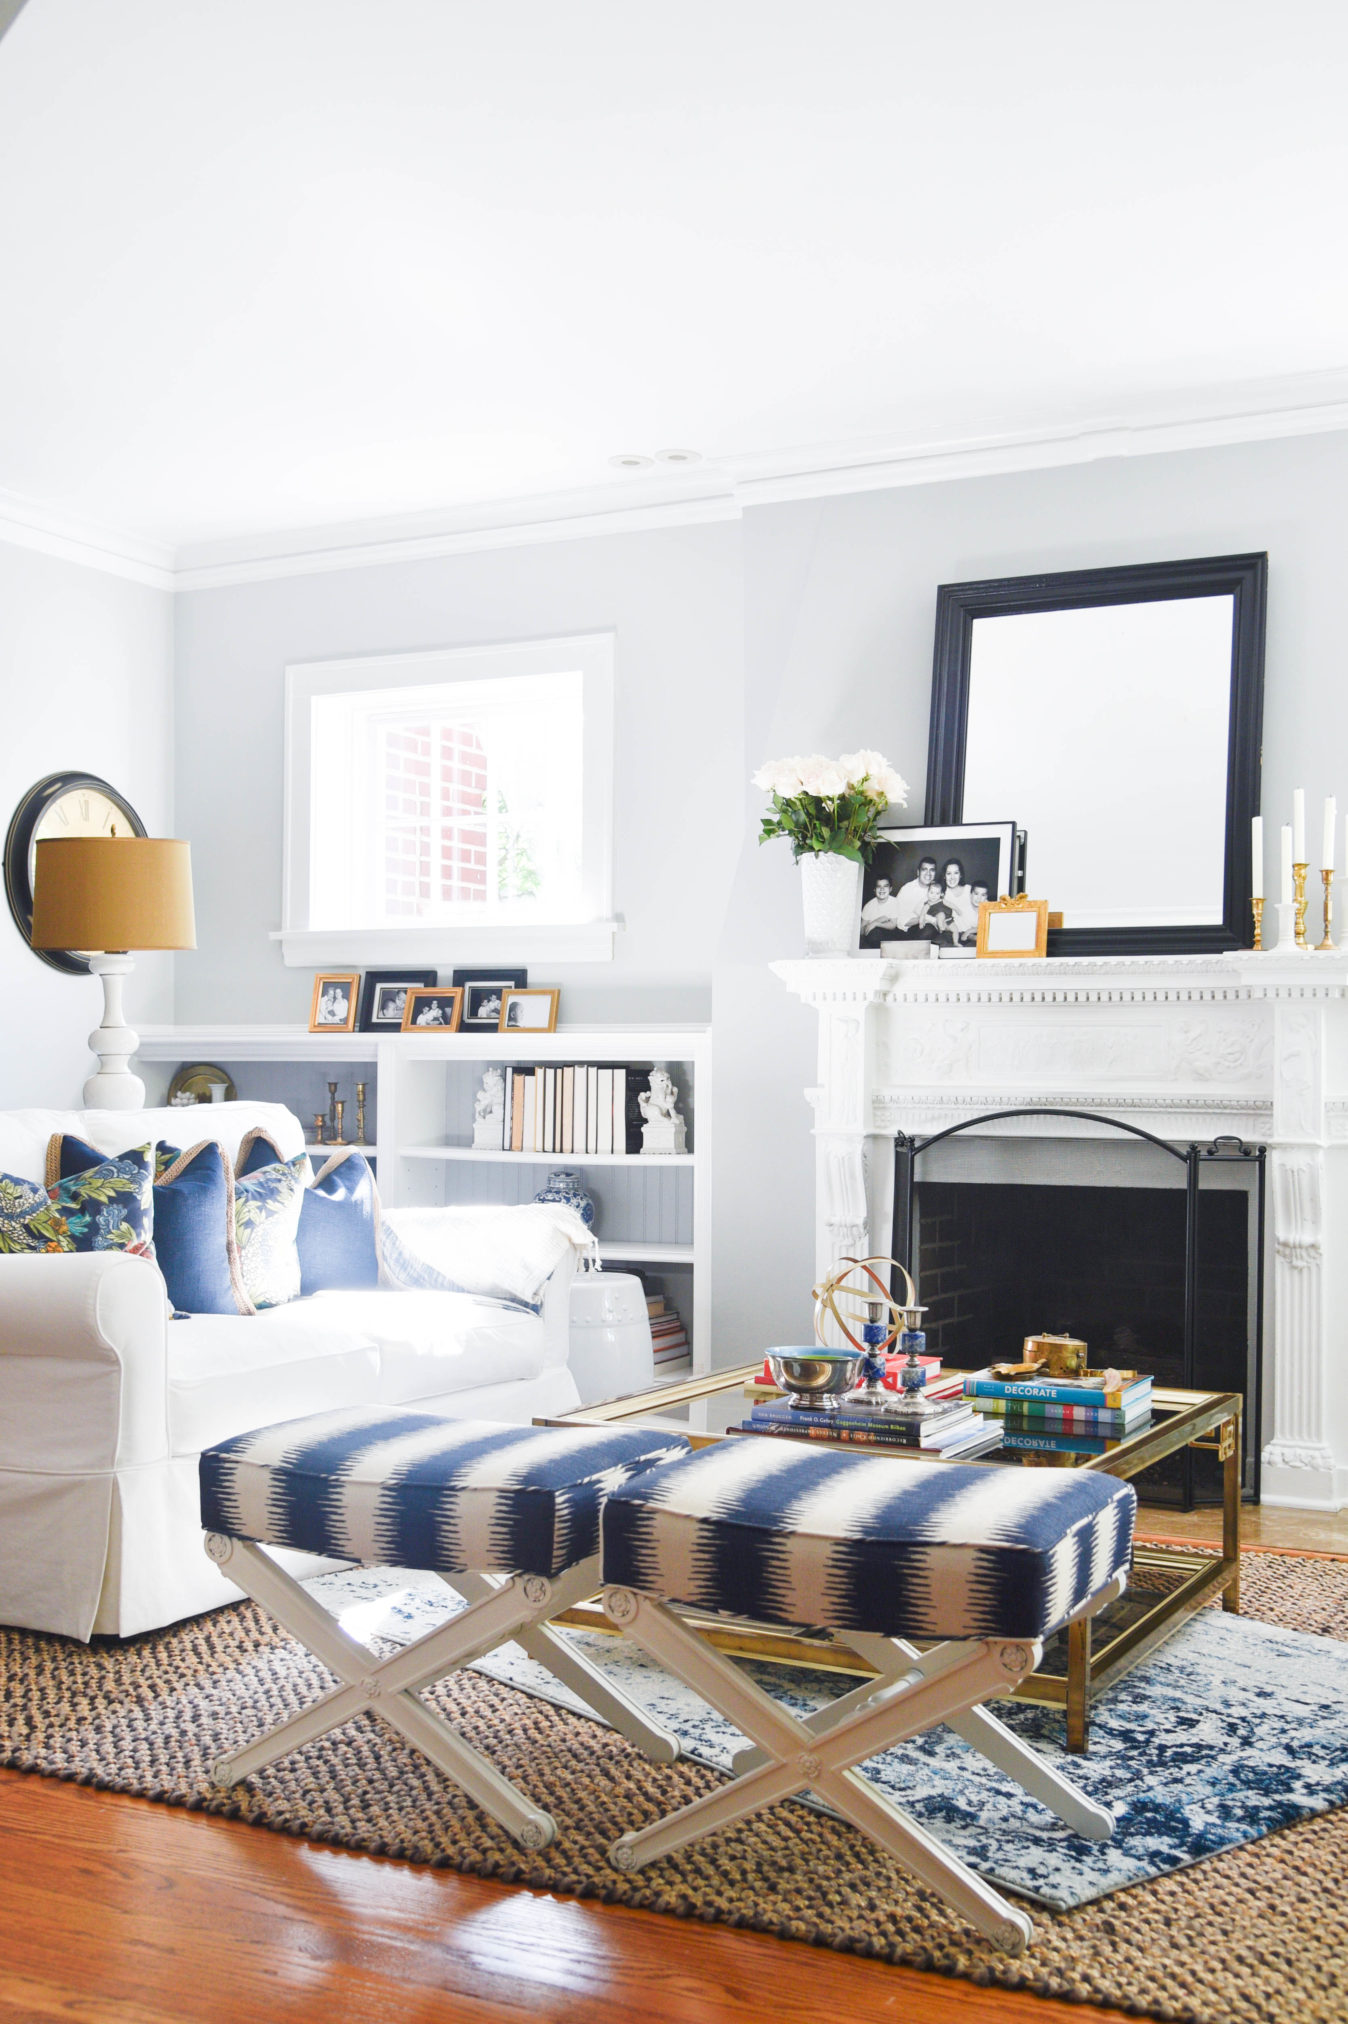 Family Friendly Living Room Ideas - Design Tips - A ...